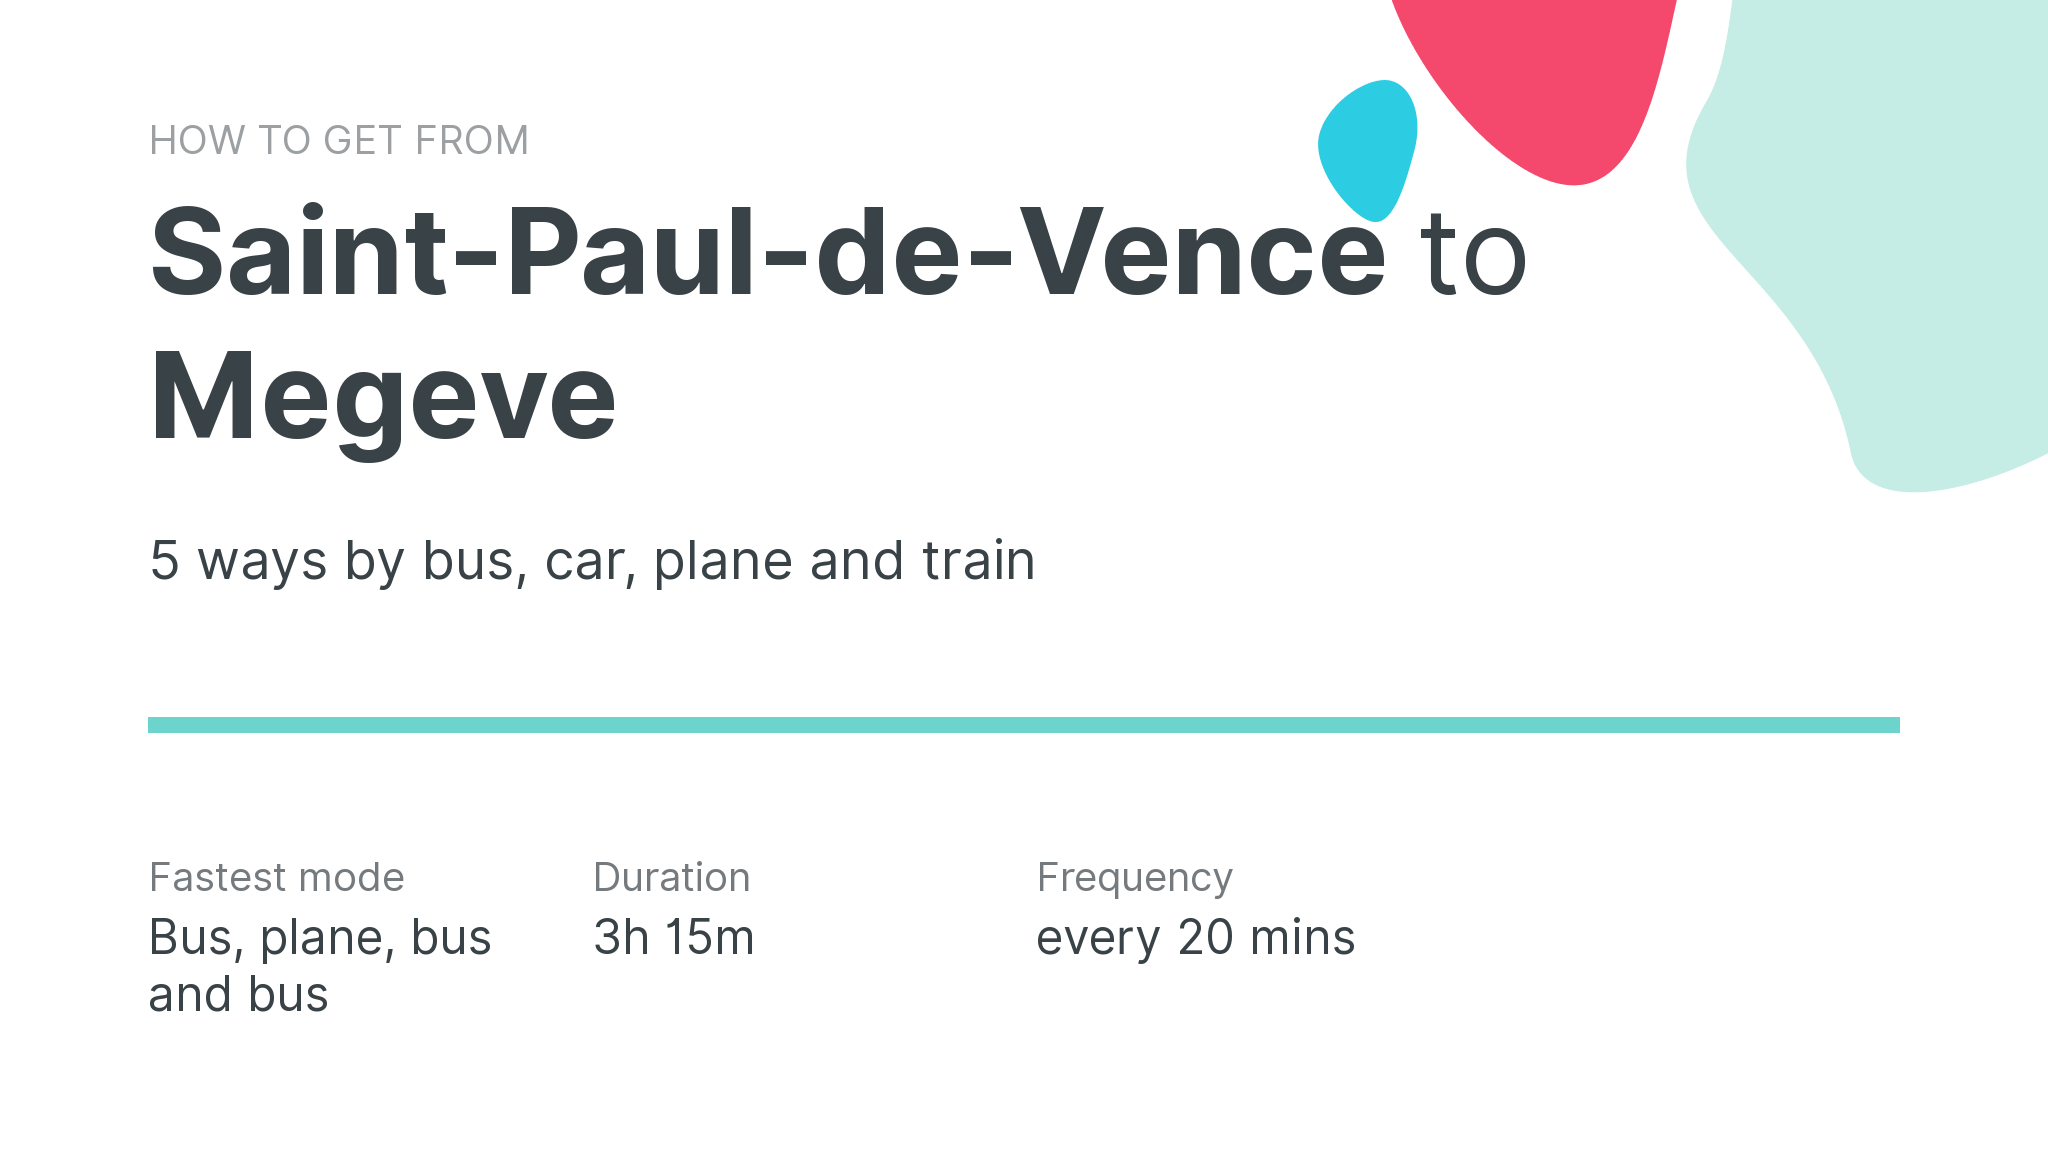 How do I get from Saint-Paul-de-Vence to Megeve